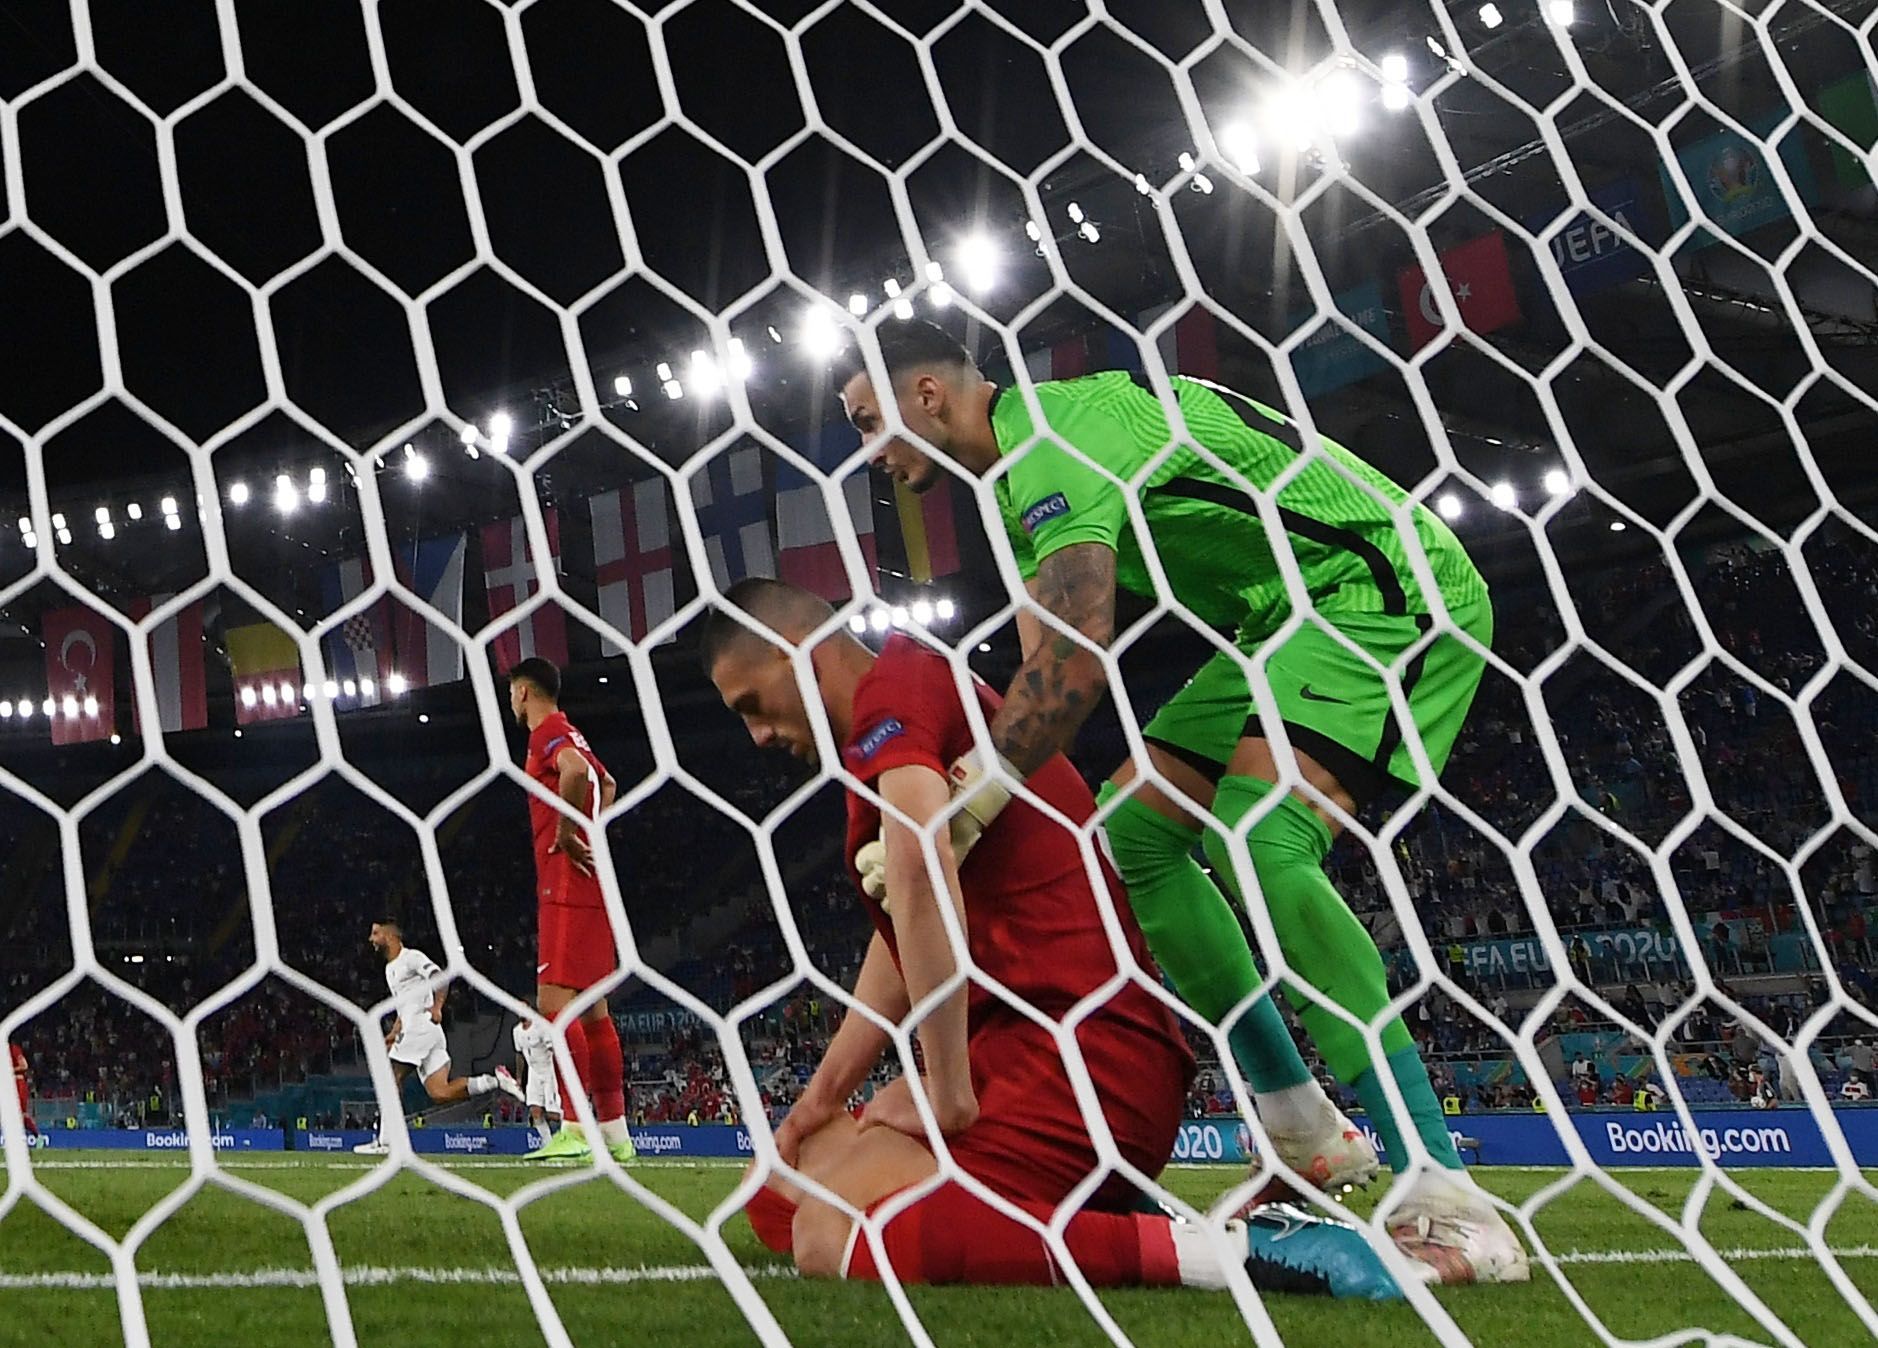 Zničený Merih Demiral poté, co dal vlastní gól v zápase Turecko - Itálie na ME 2020